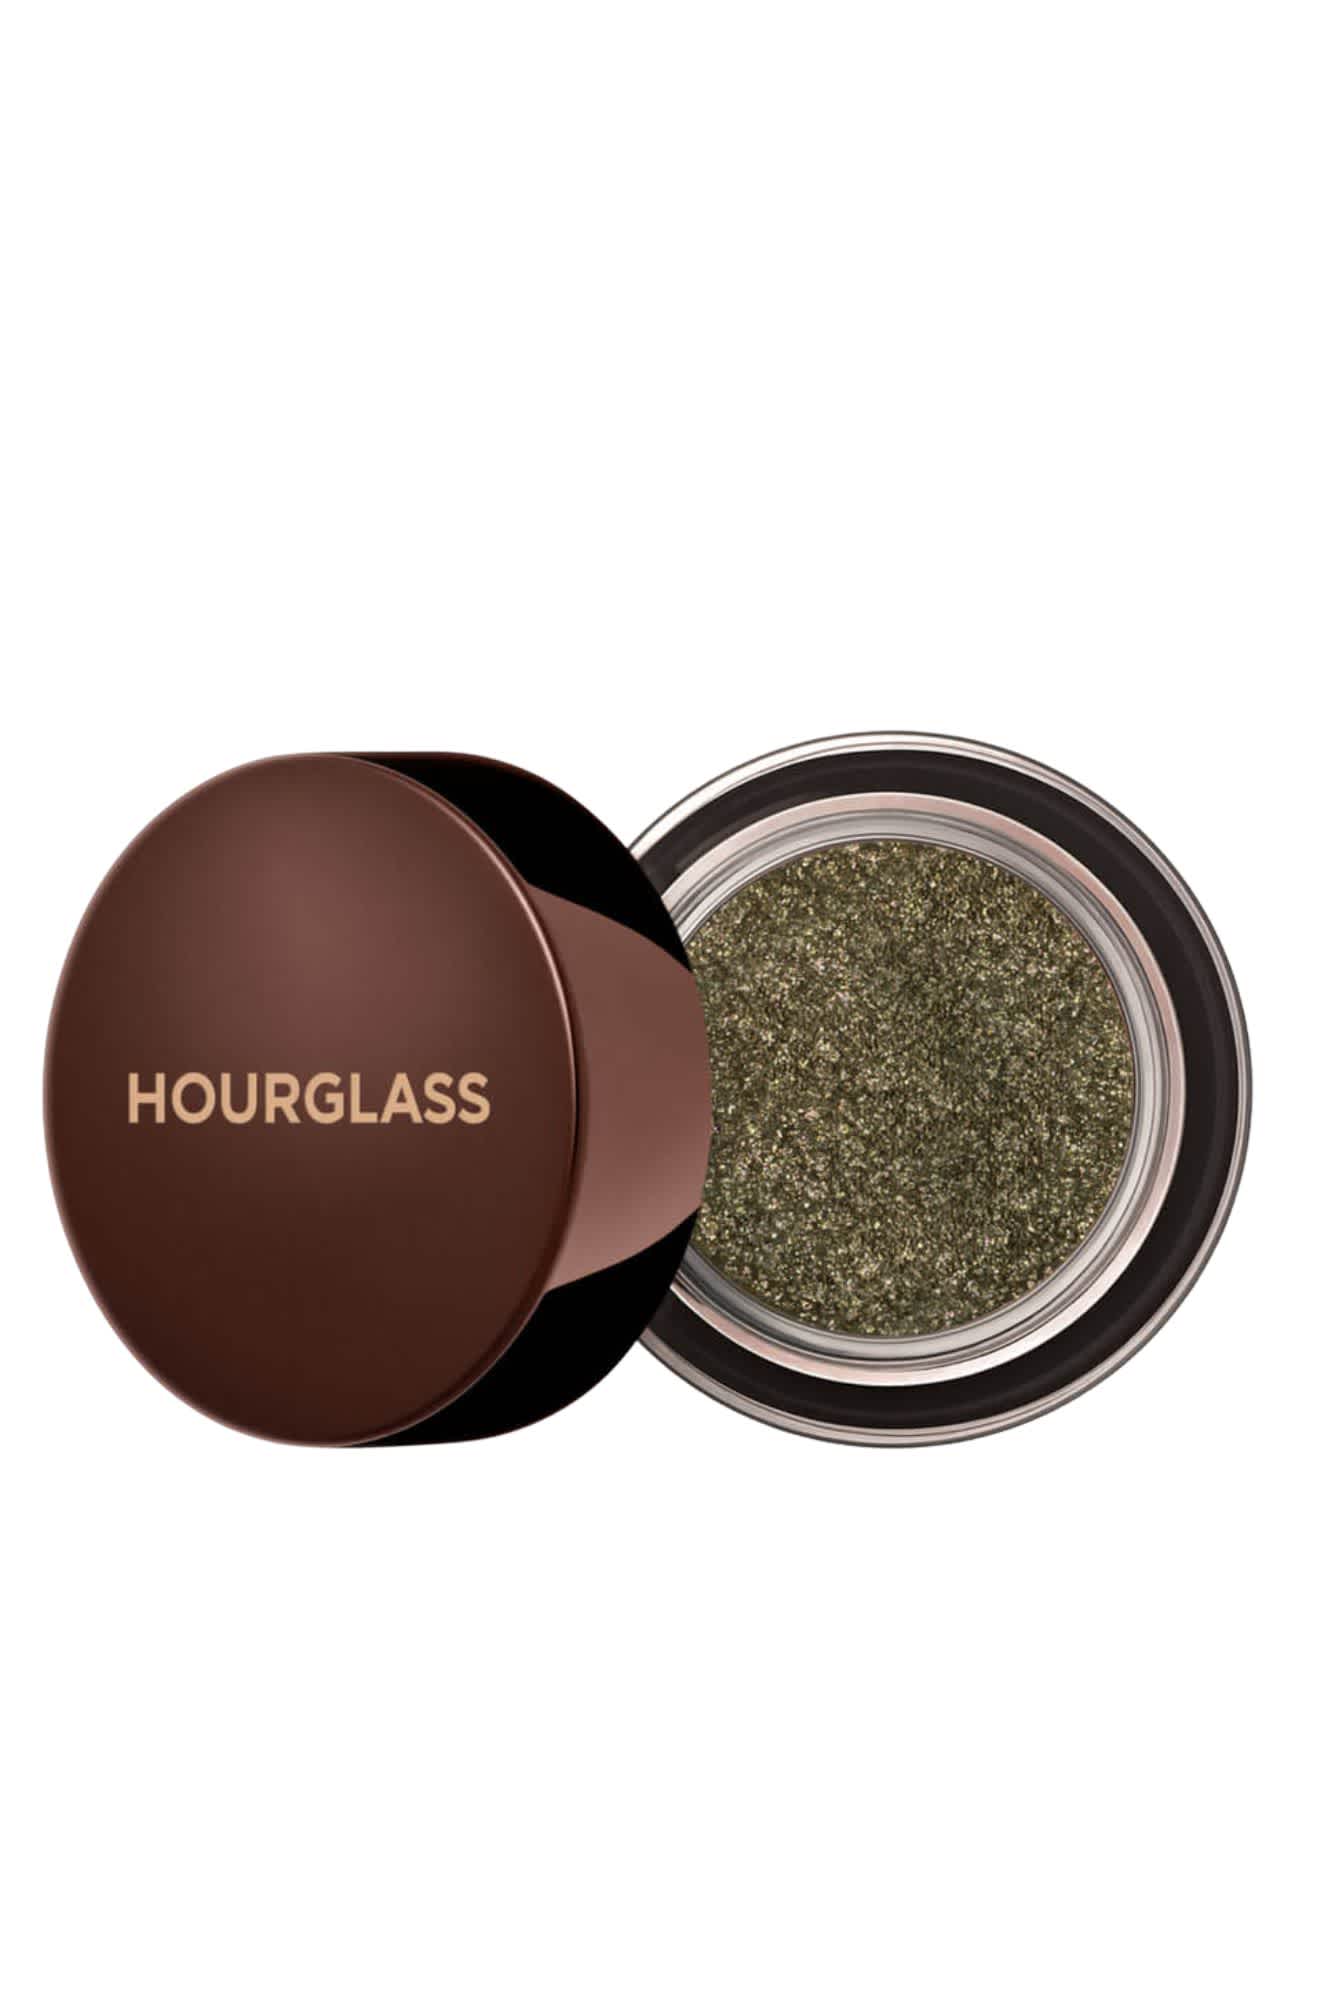 Hourglass, Scattered Light Glitter Eyeshadow ($45)